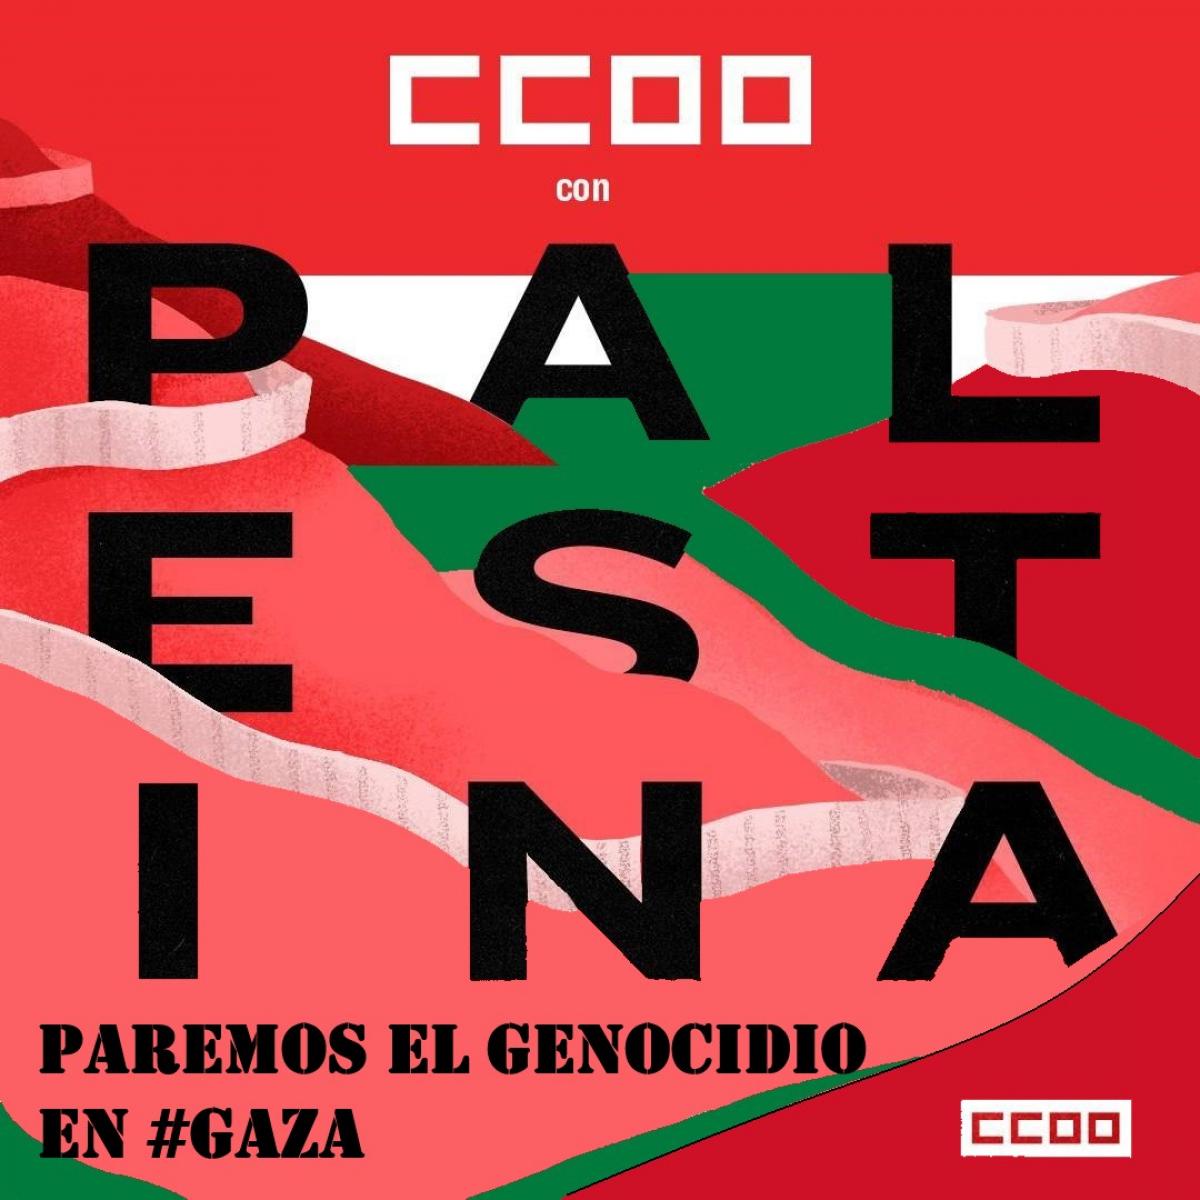 CCOO con Palestina